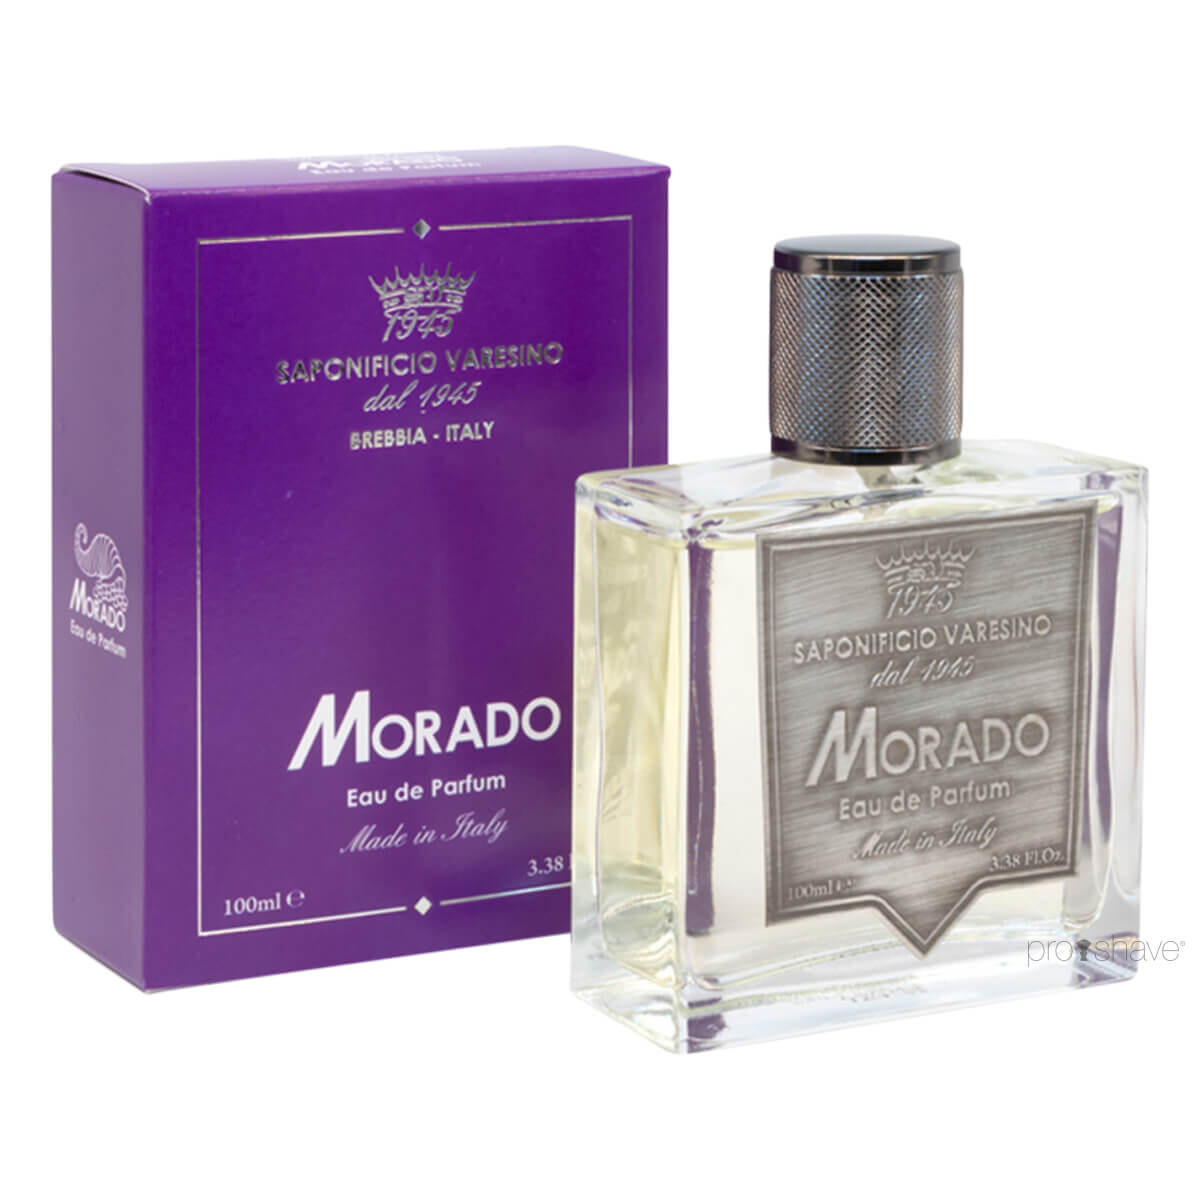 Billede af Saponificio Varesino Eau de Parfum, Morado, 100 ml.